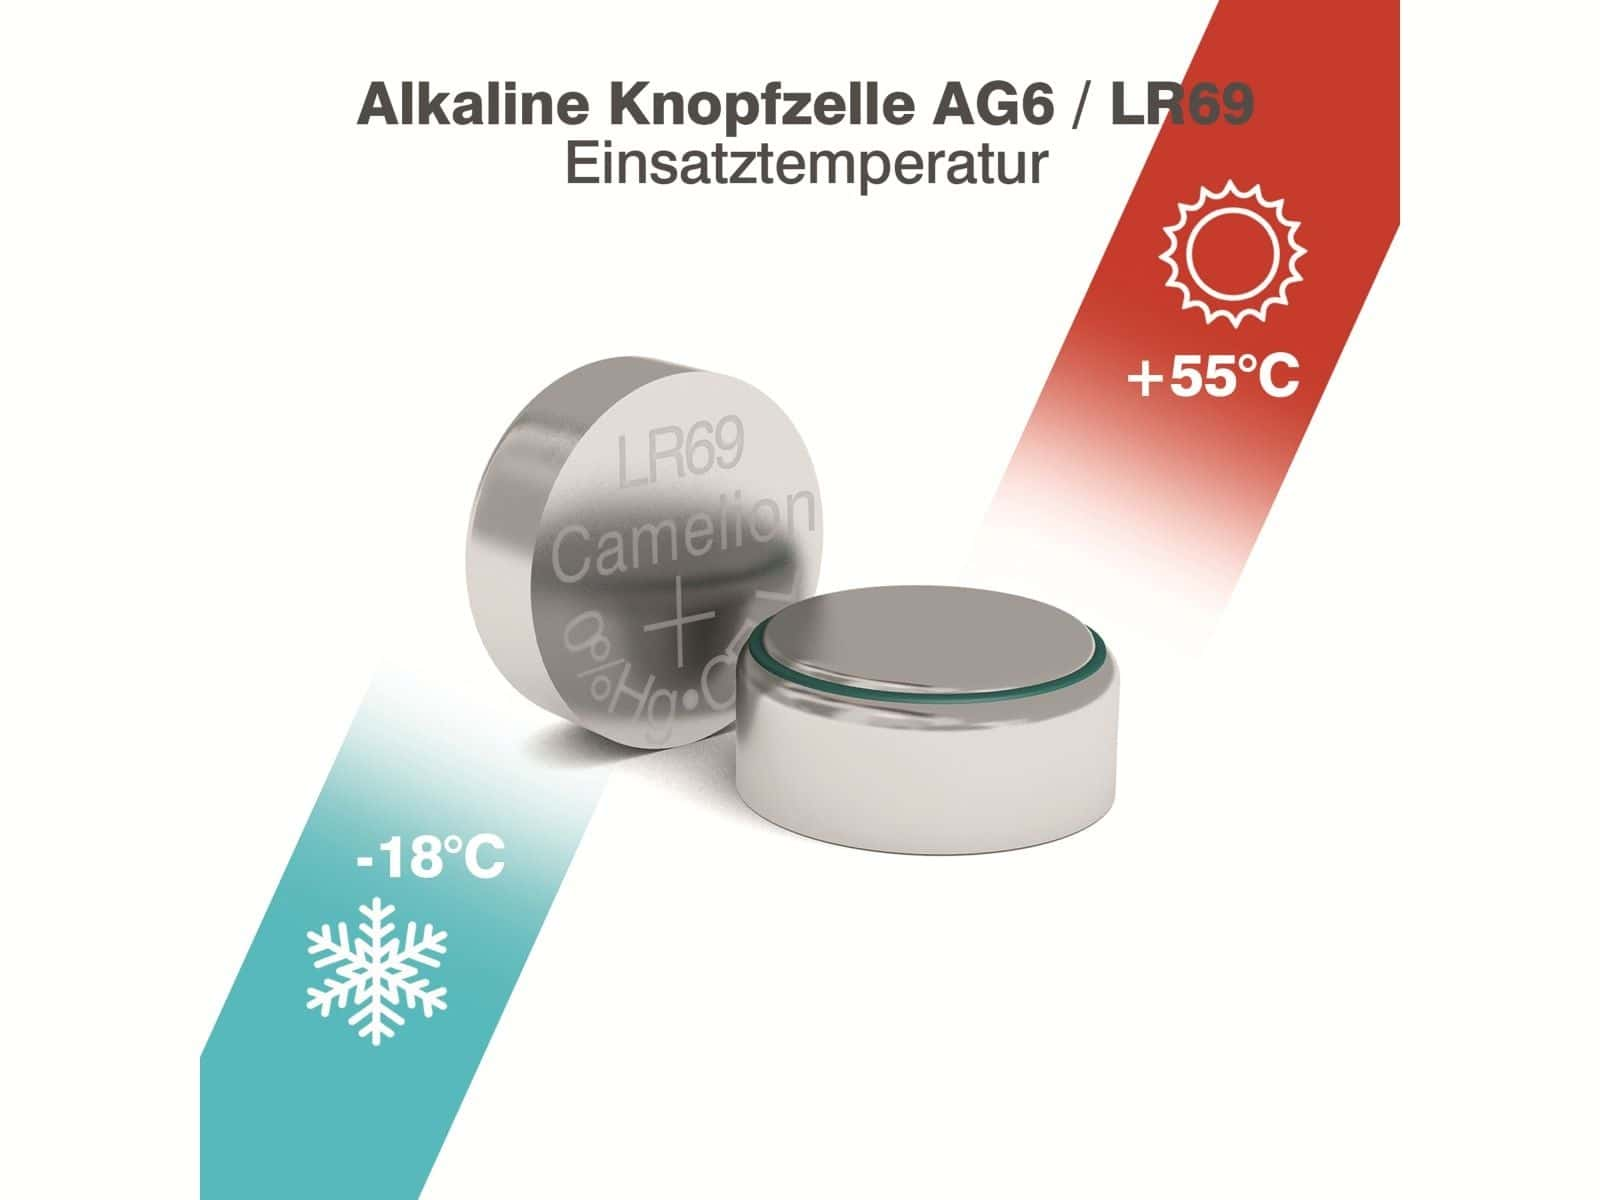 Alkaline St. Knopfzelle 10 AG6, Knopfzelle CAMELION